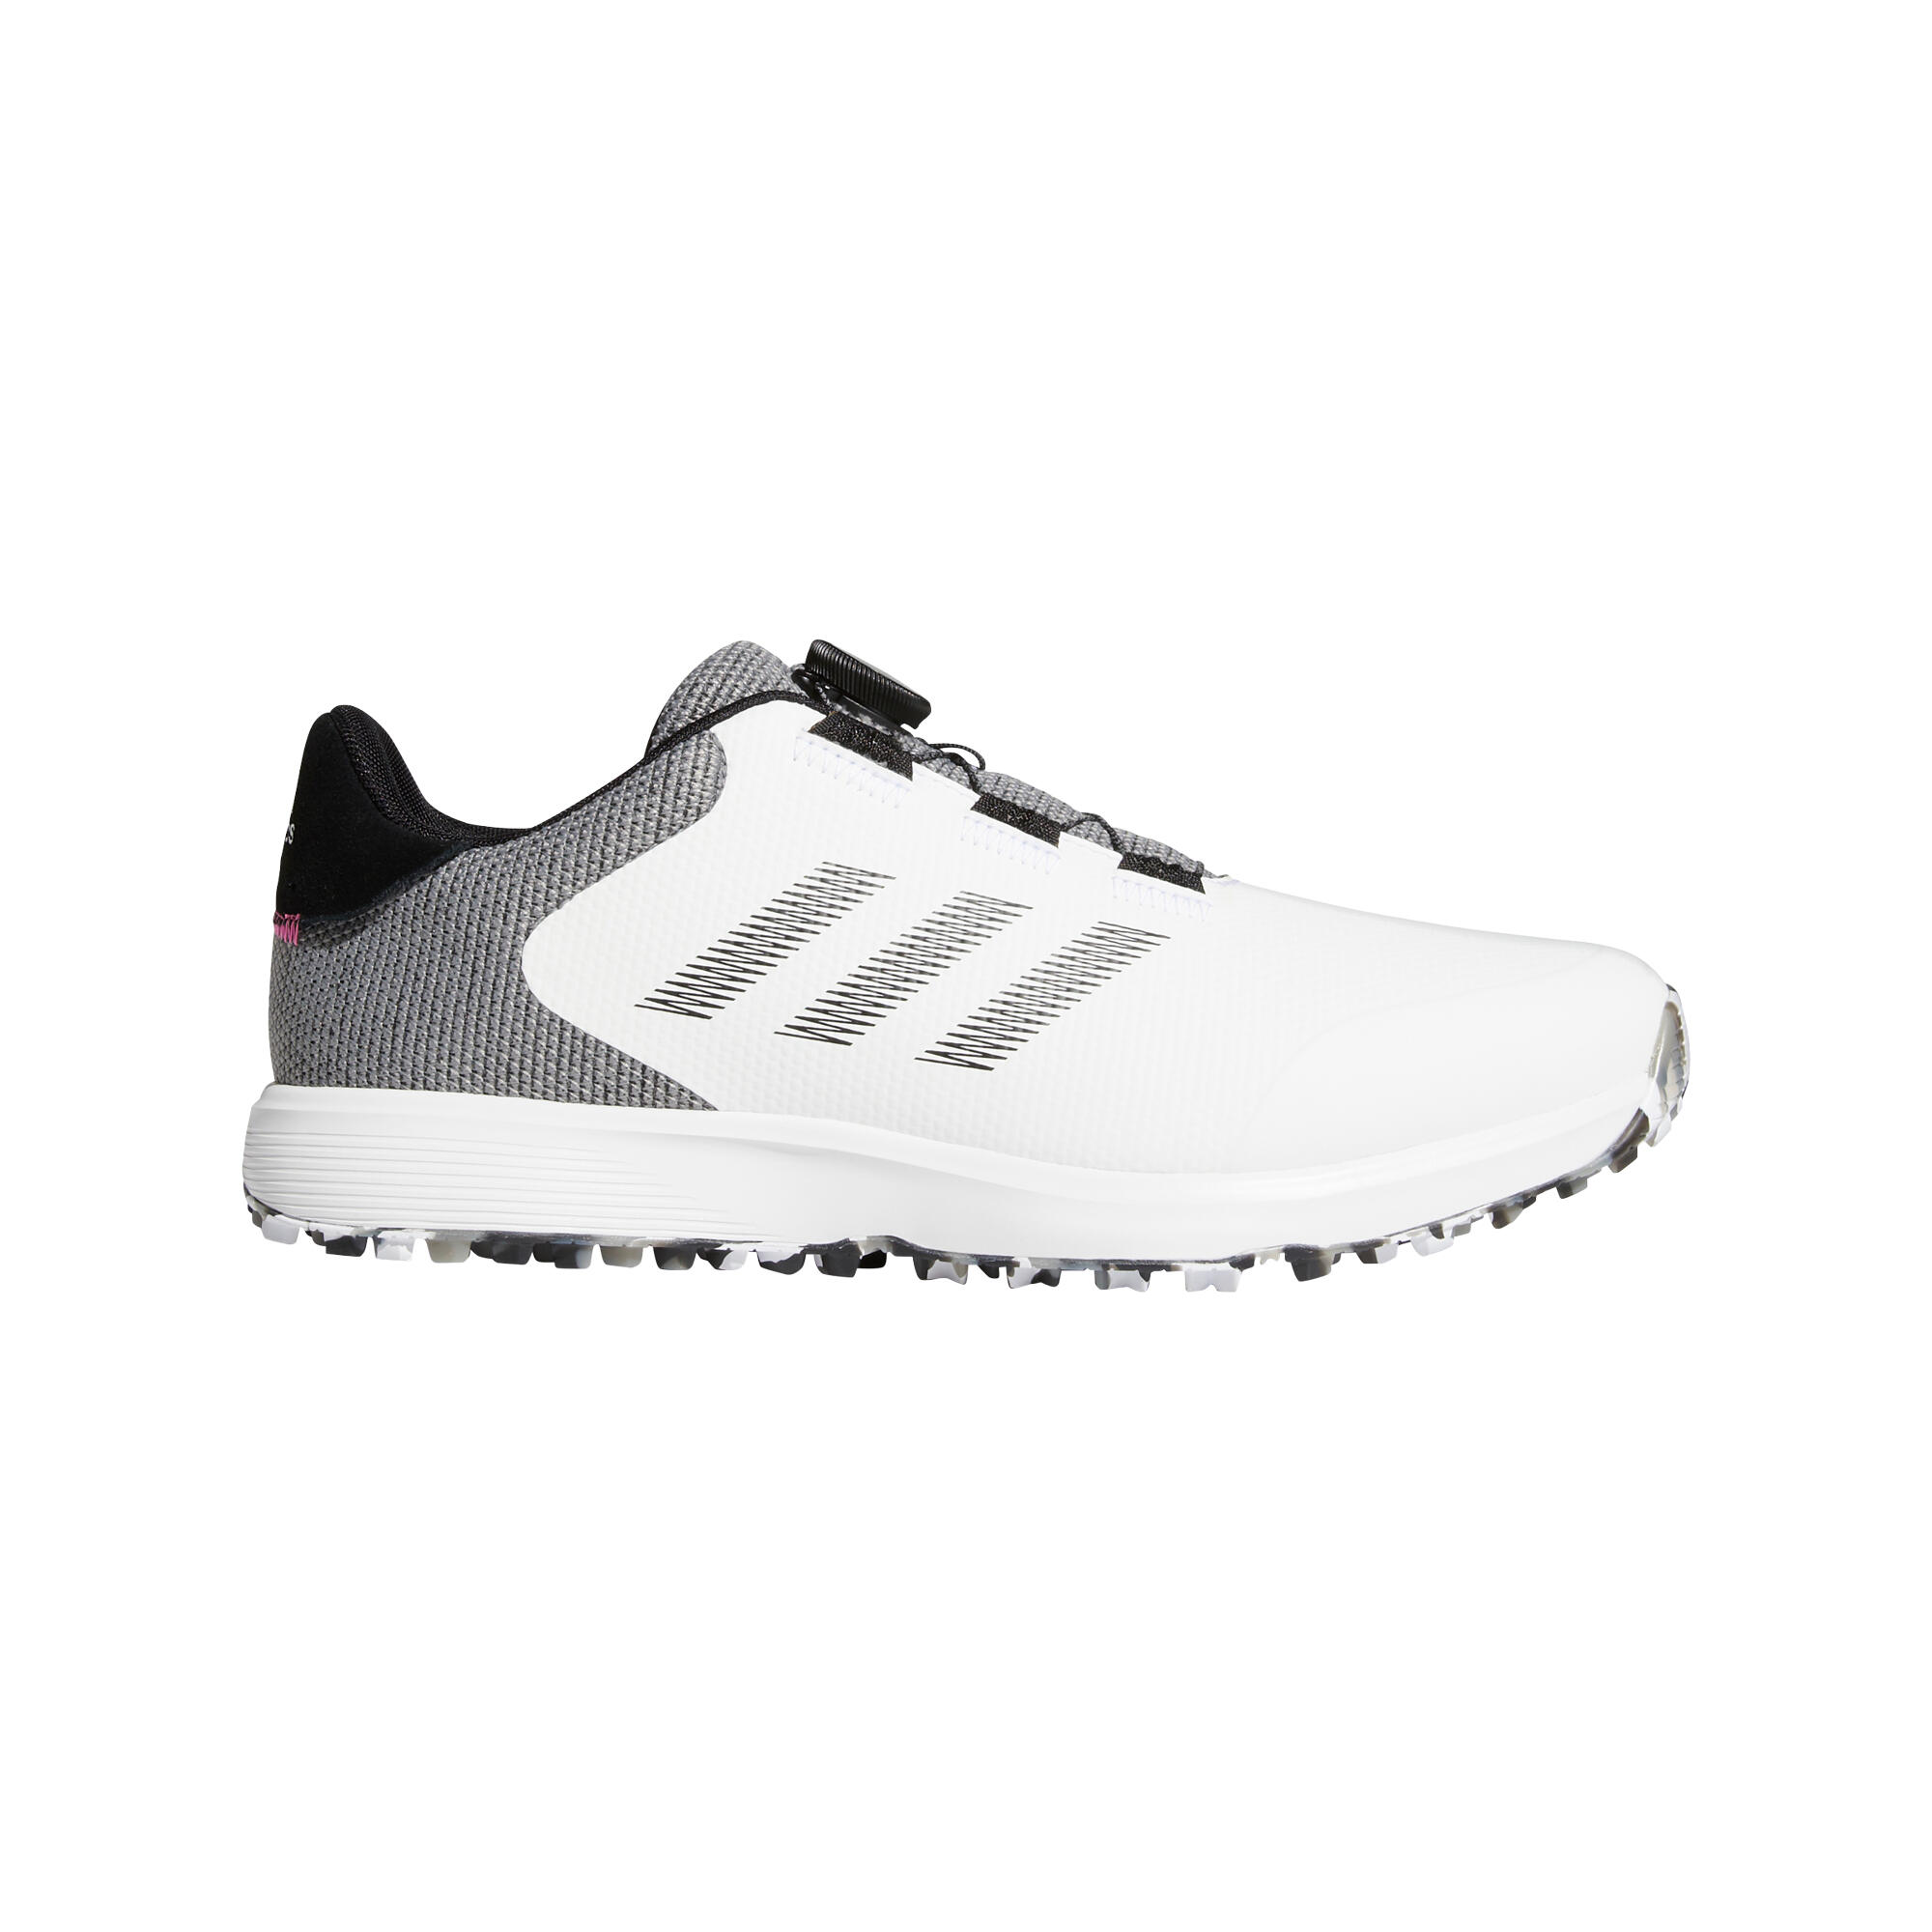 Men’s Waterproof Golf Shoes S2G SLBOA white 2/7